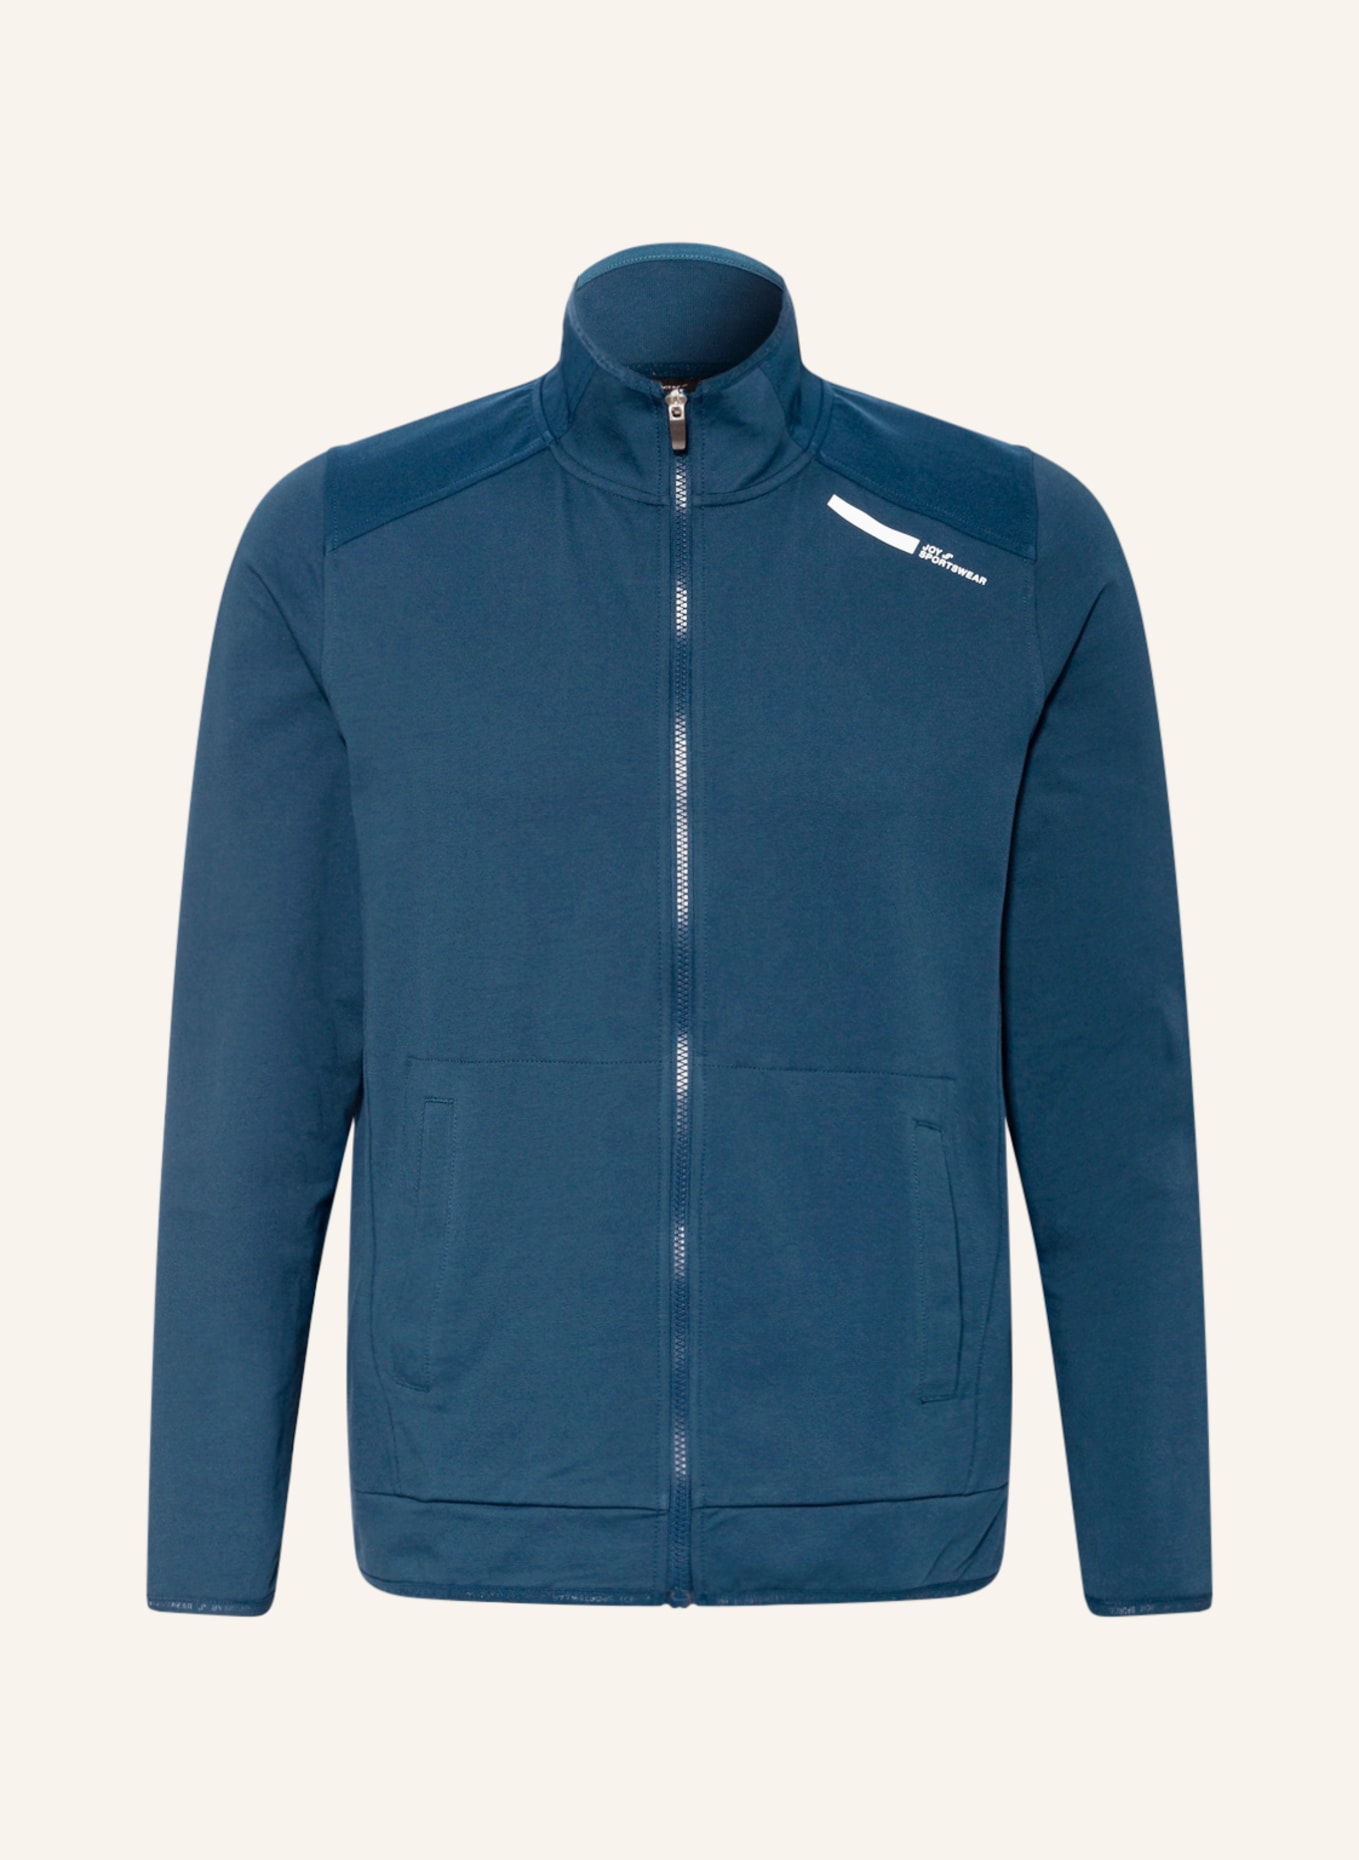 JOY sportswear Sweatjacke TIMON, Farbe: PETROL (Bild 1)